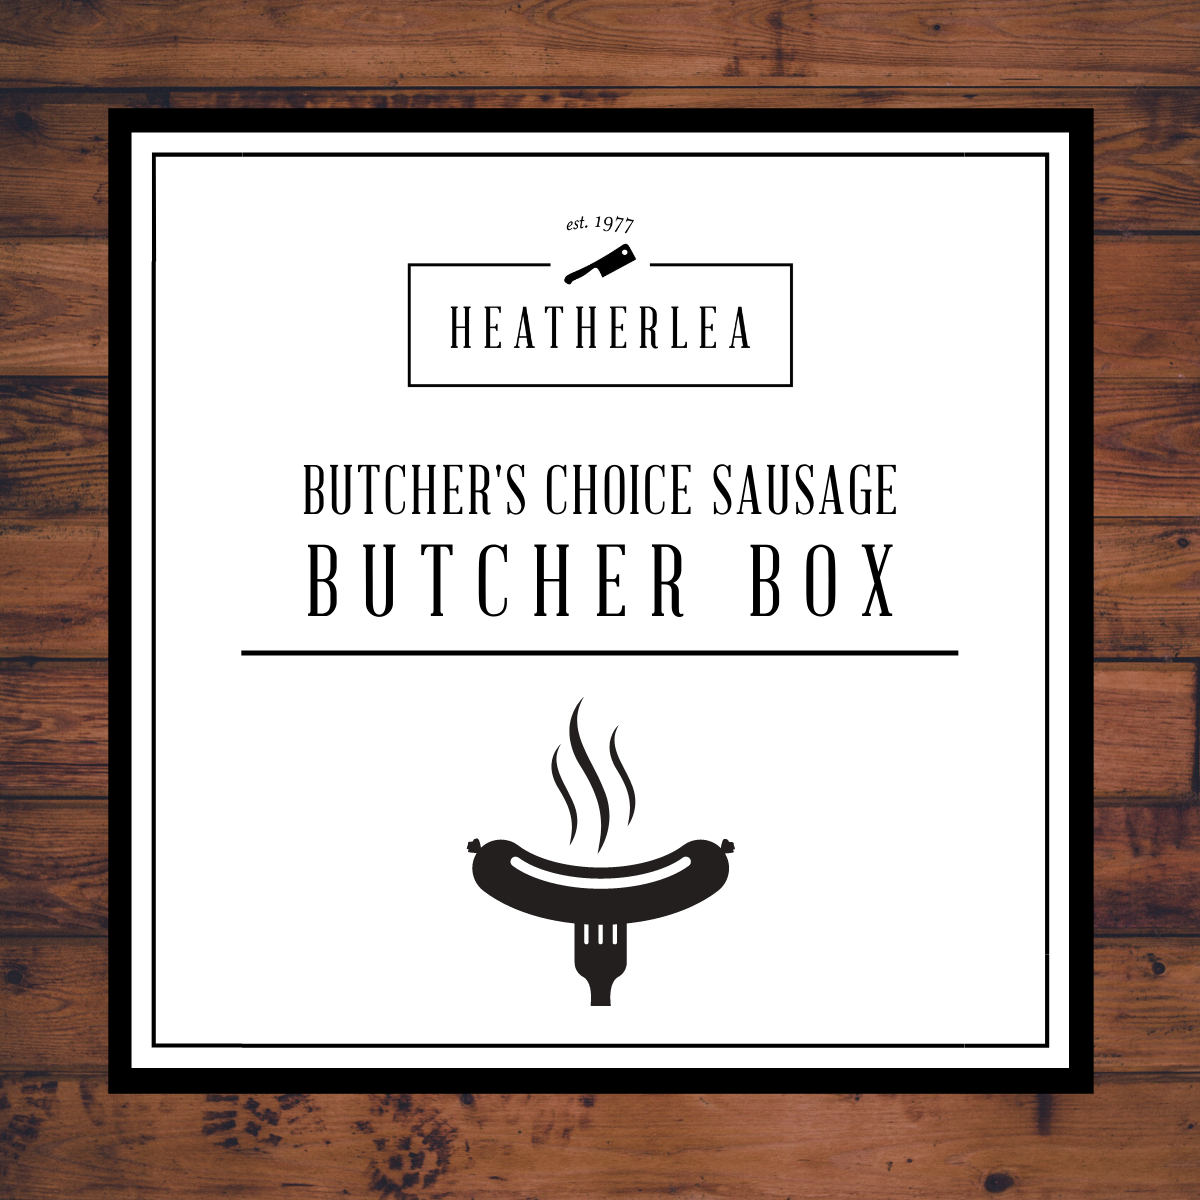 Butcher's Choice Sausage Butcher Box